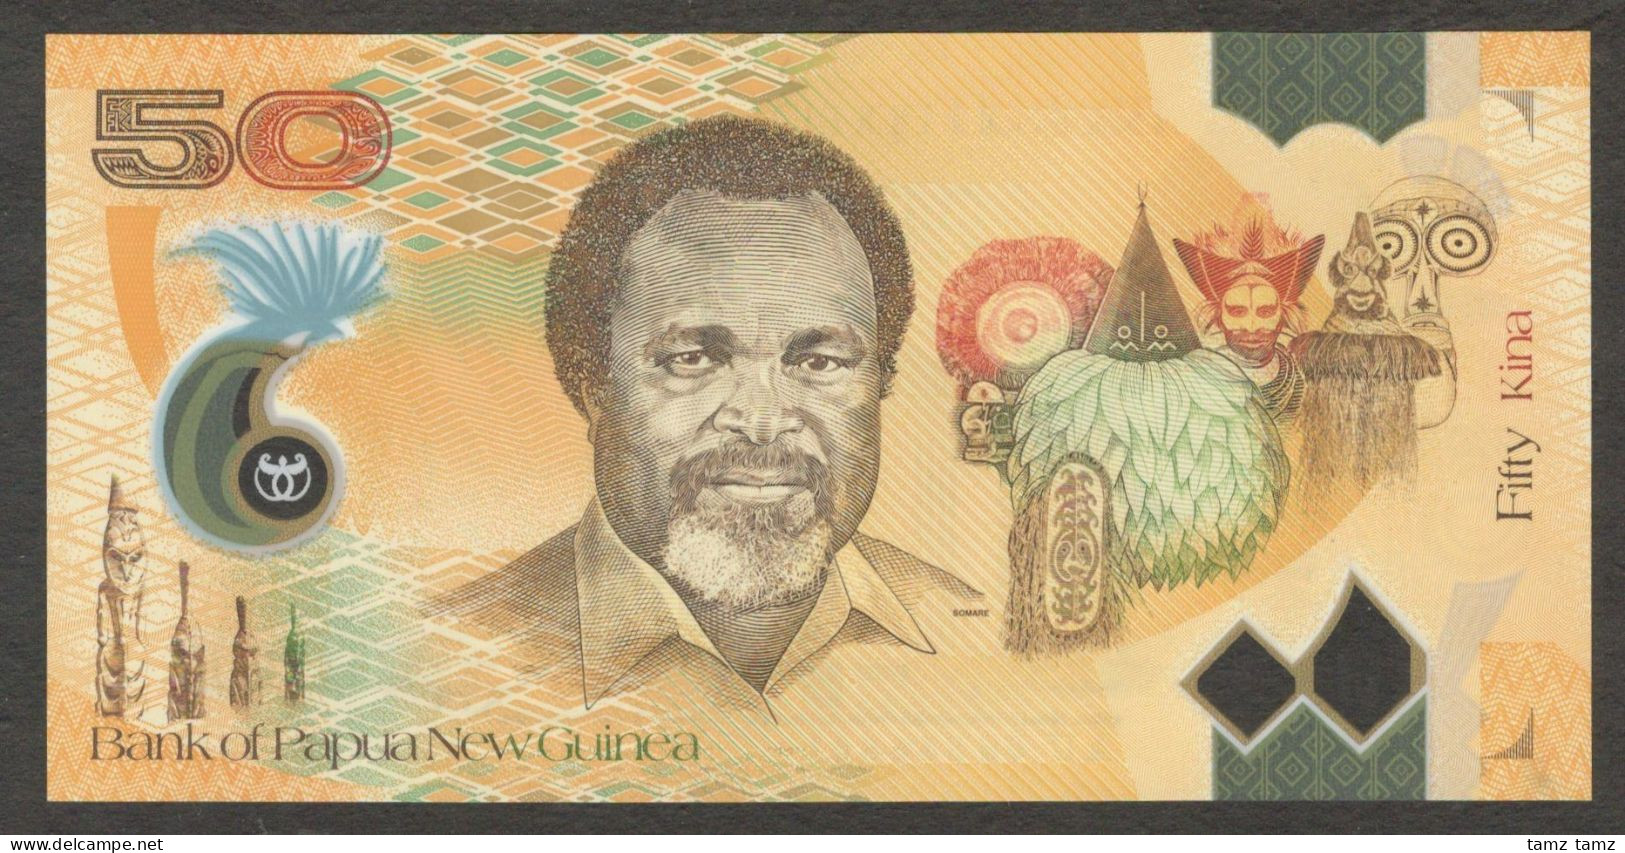 Papua New Guinea 50 Kina 2008 Polymer UNC Beautiful Banknotes - Papua-Neuguinea